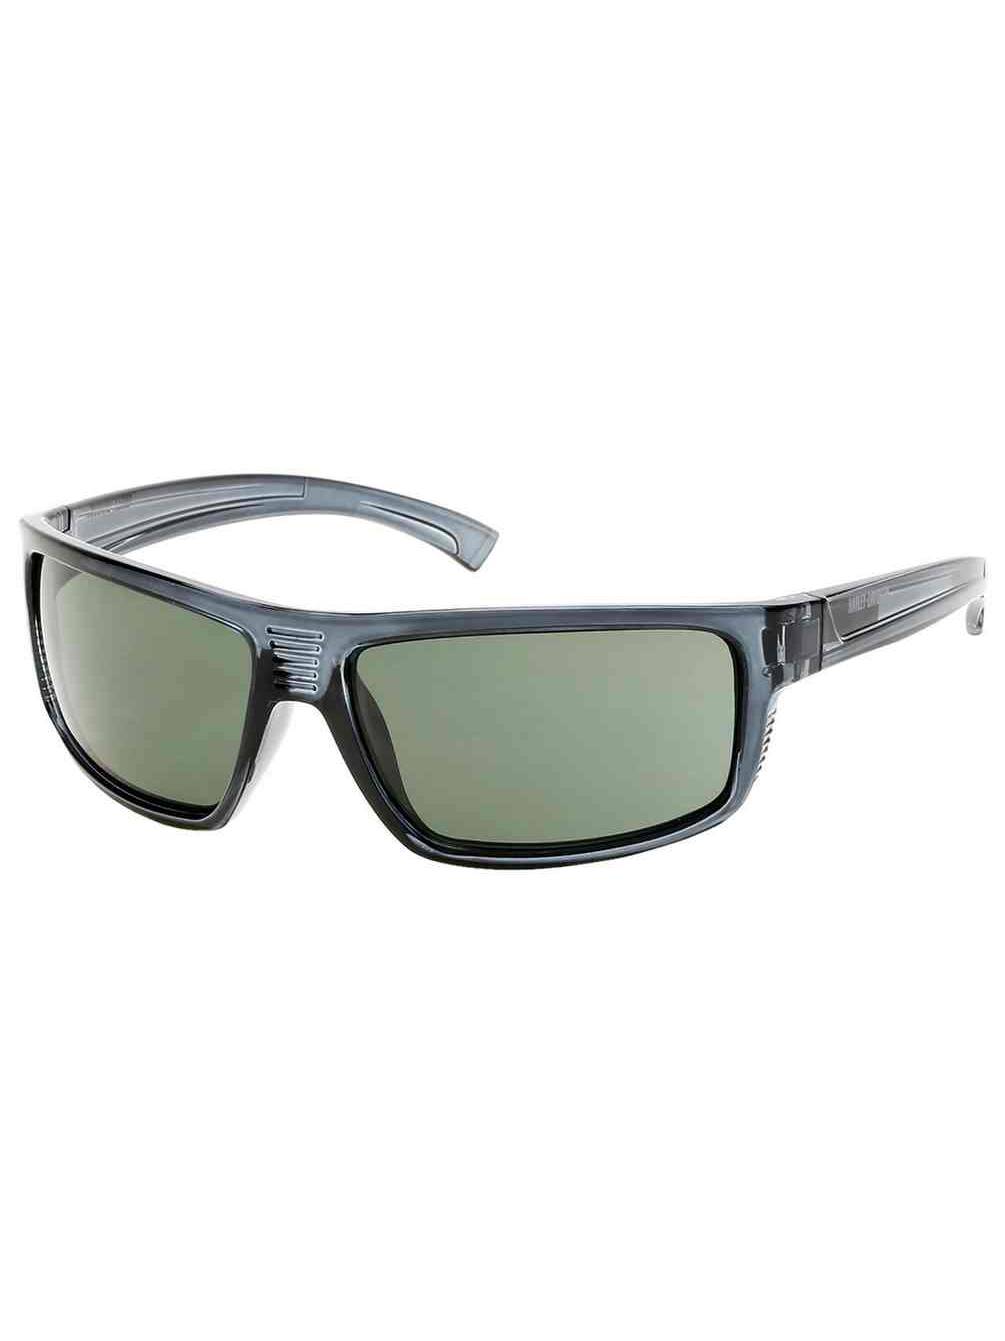 Harley-Davidson Men's Rectangle H-D Script Sunglasses, Gray Frame & Green Lens, Harley Davidson - image 1 of 8